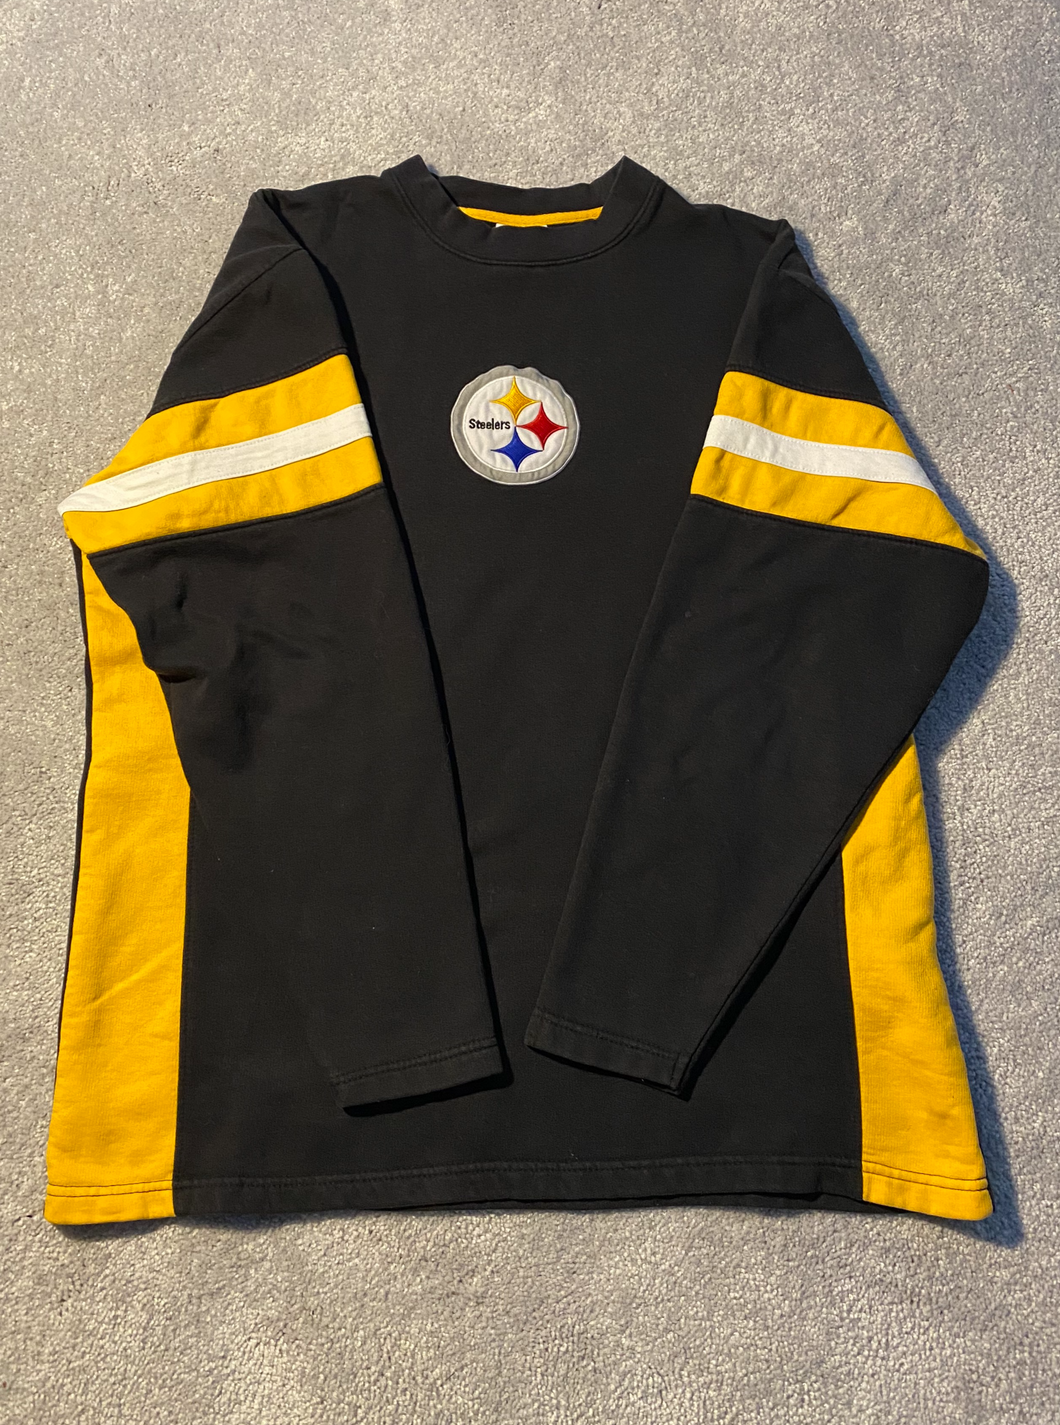 2000s Pittsburgh Steelers Crewneck Sweatshirt Size L/Xl